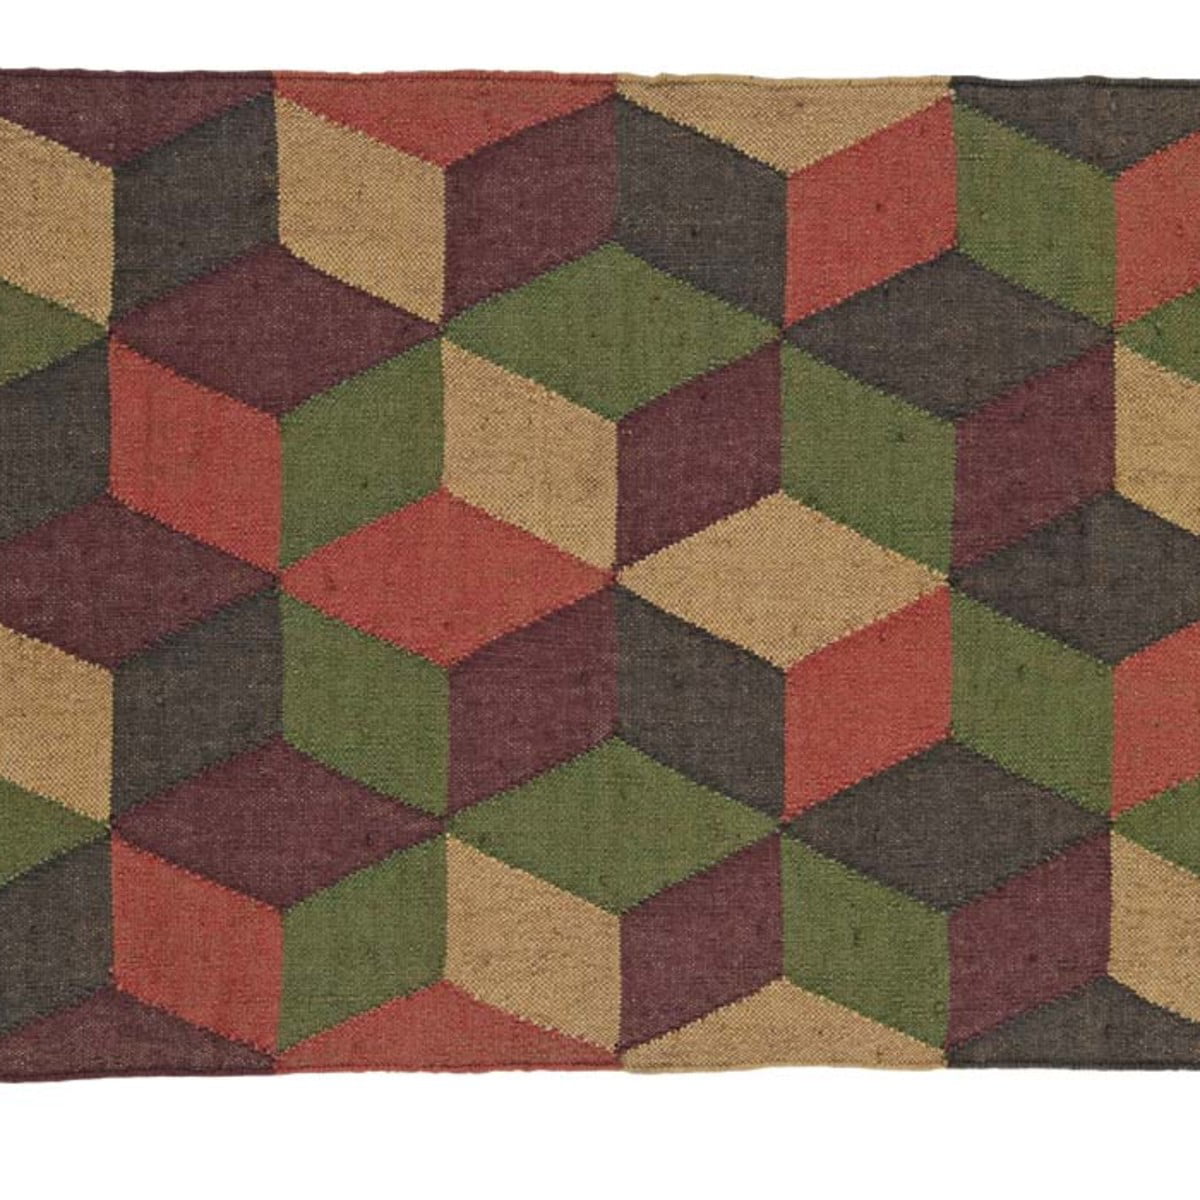 Farmhouse Sand Tan Geometric Jute Calistoga Knotted Tassels Rectangle 24x36 Doormat or Accent Rug 